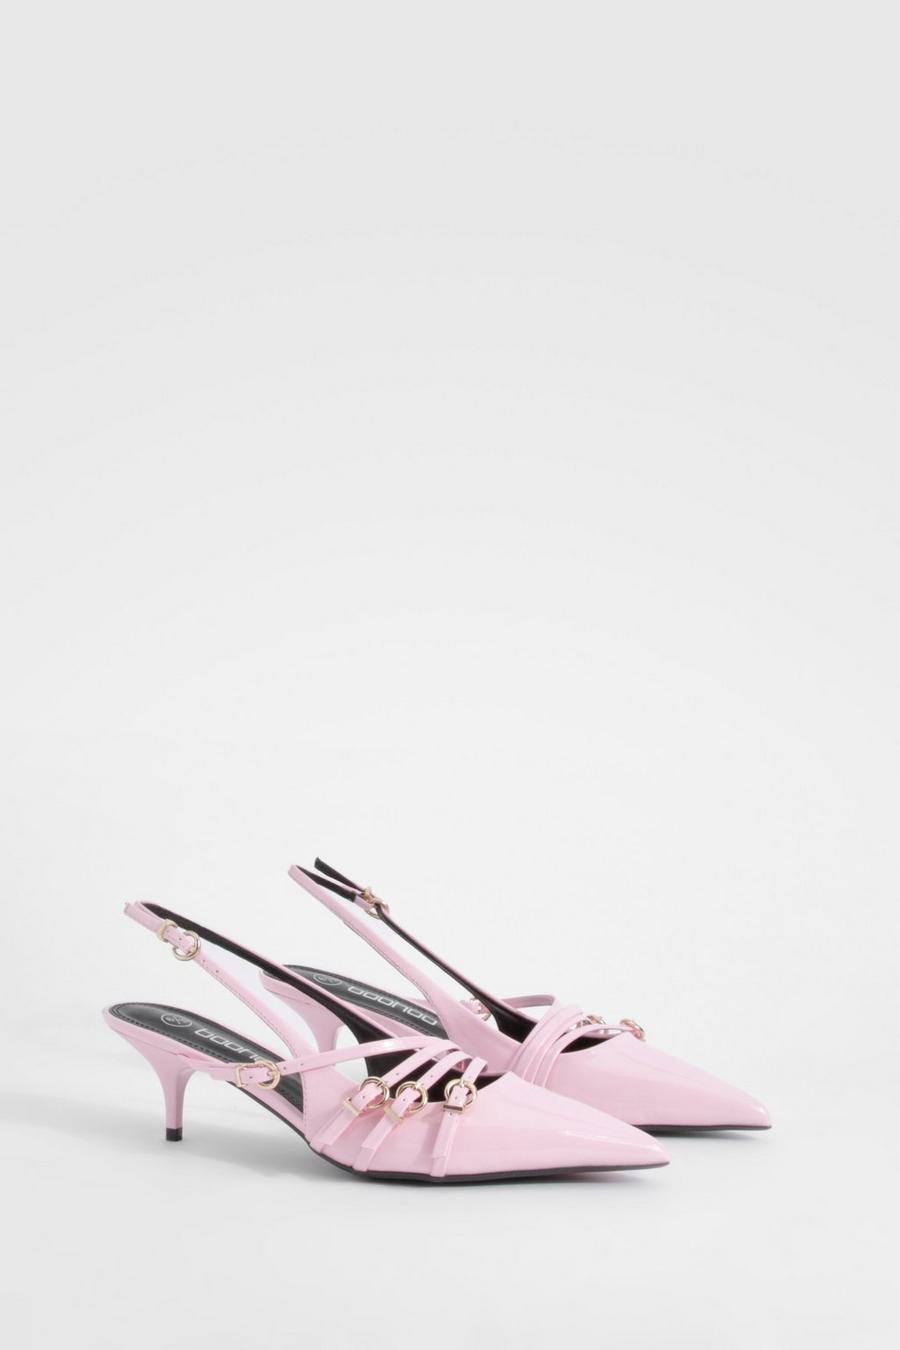 Pink zapatillas de running Nike media maratón talla 41 moradas